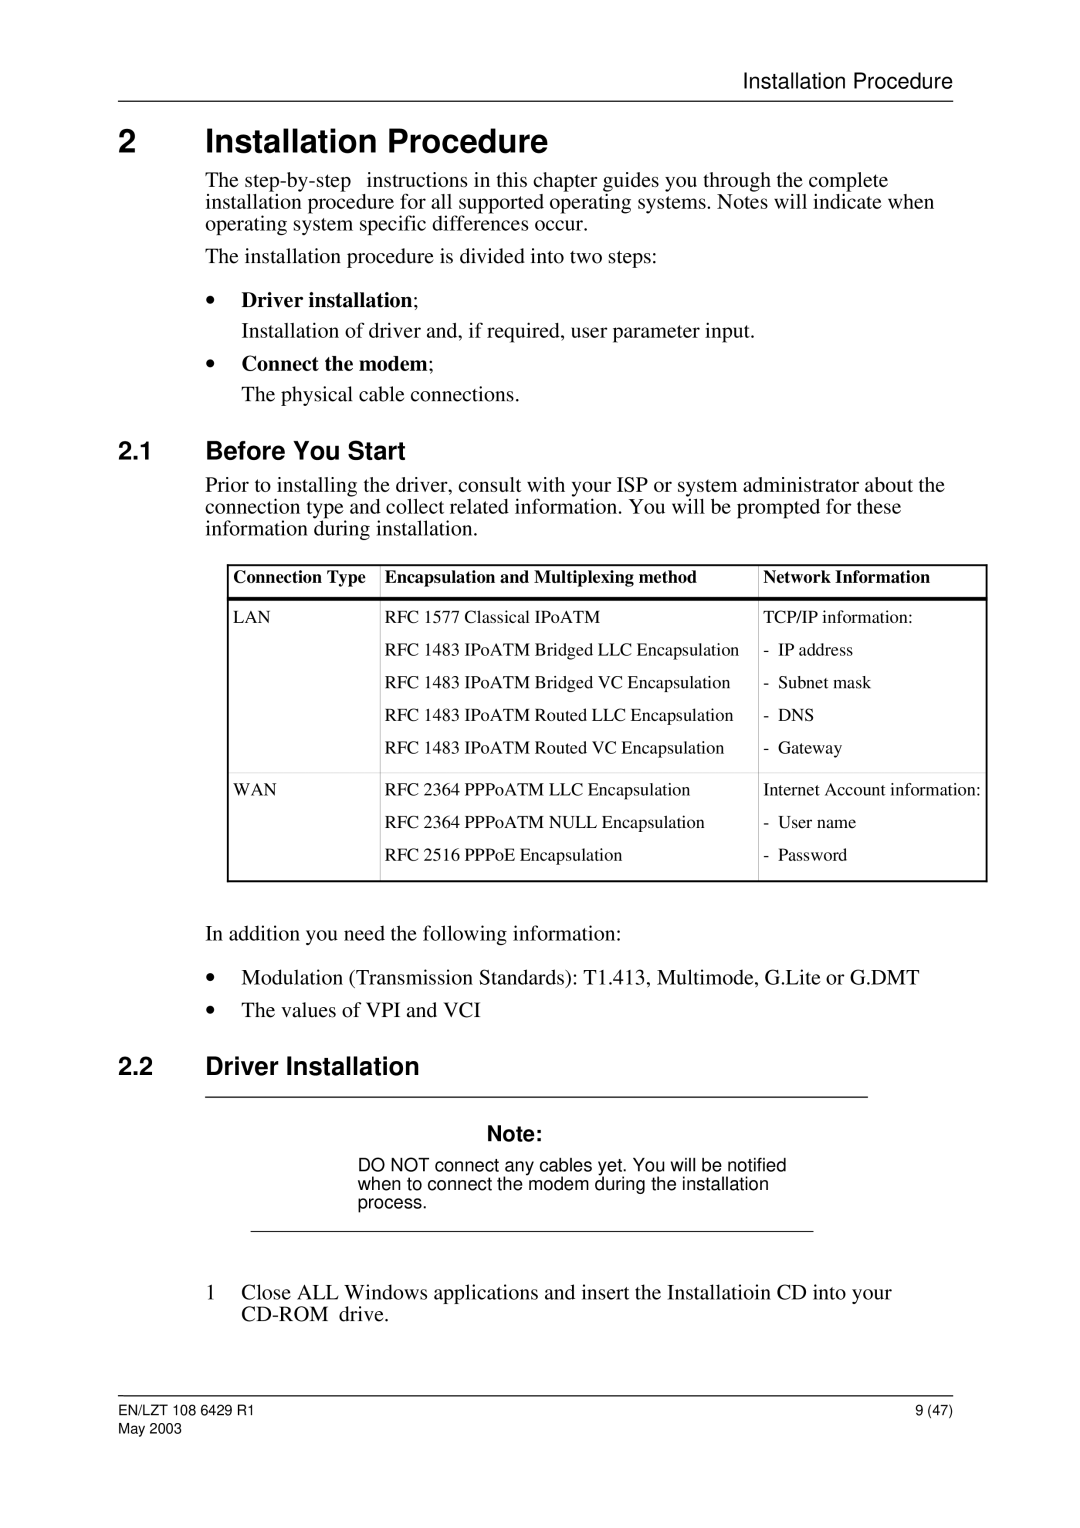 Ericsson HM121dp, HM121di manual Installation Procedure, Before You Start, Driver Installation 